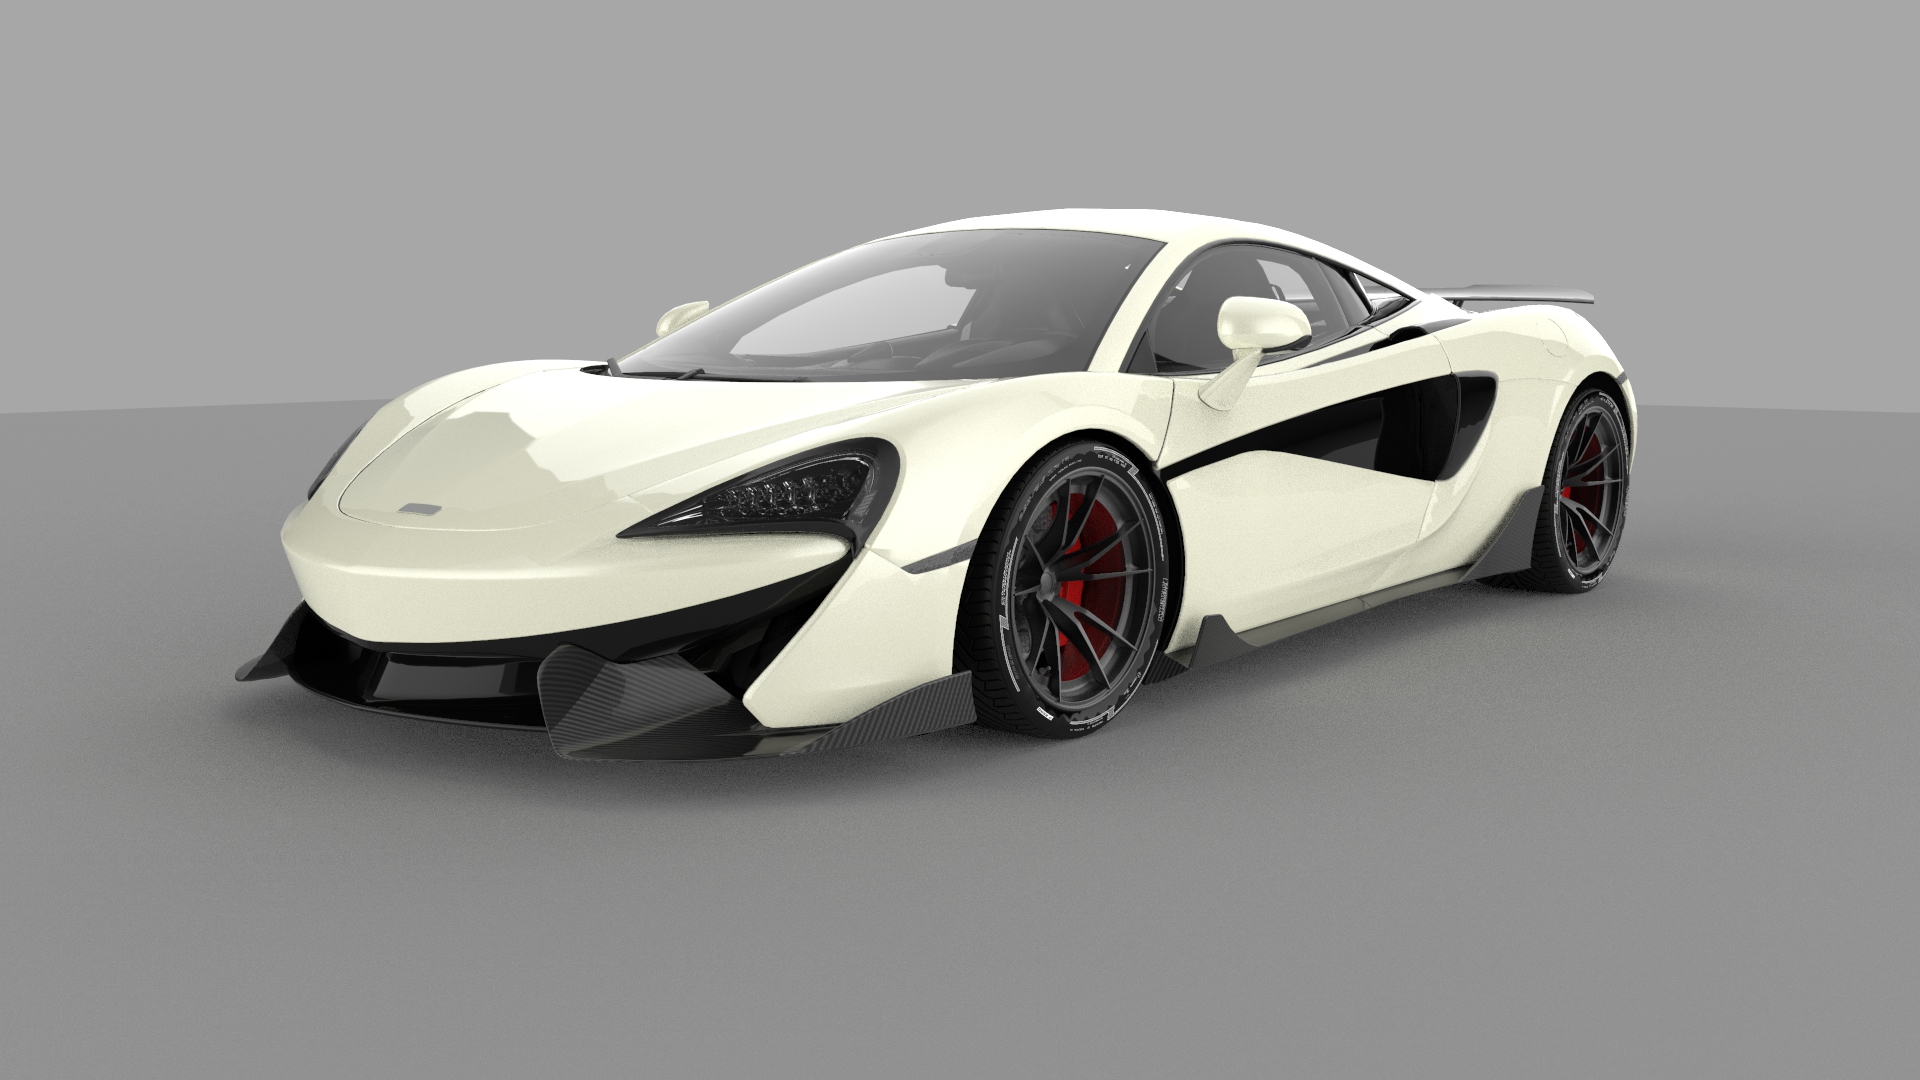 Check price and buy Duke Dynamics Body kit set for McLaren 570s